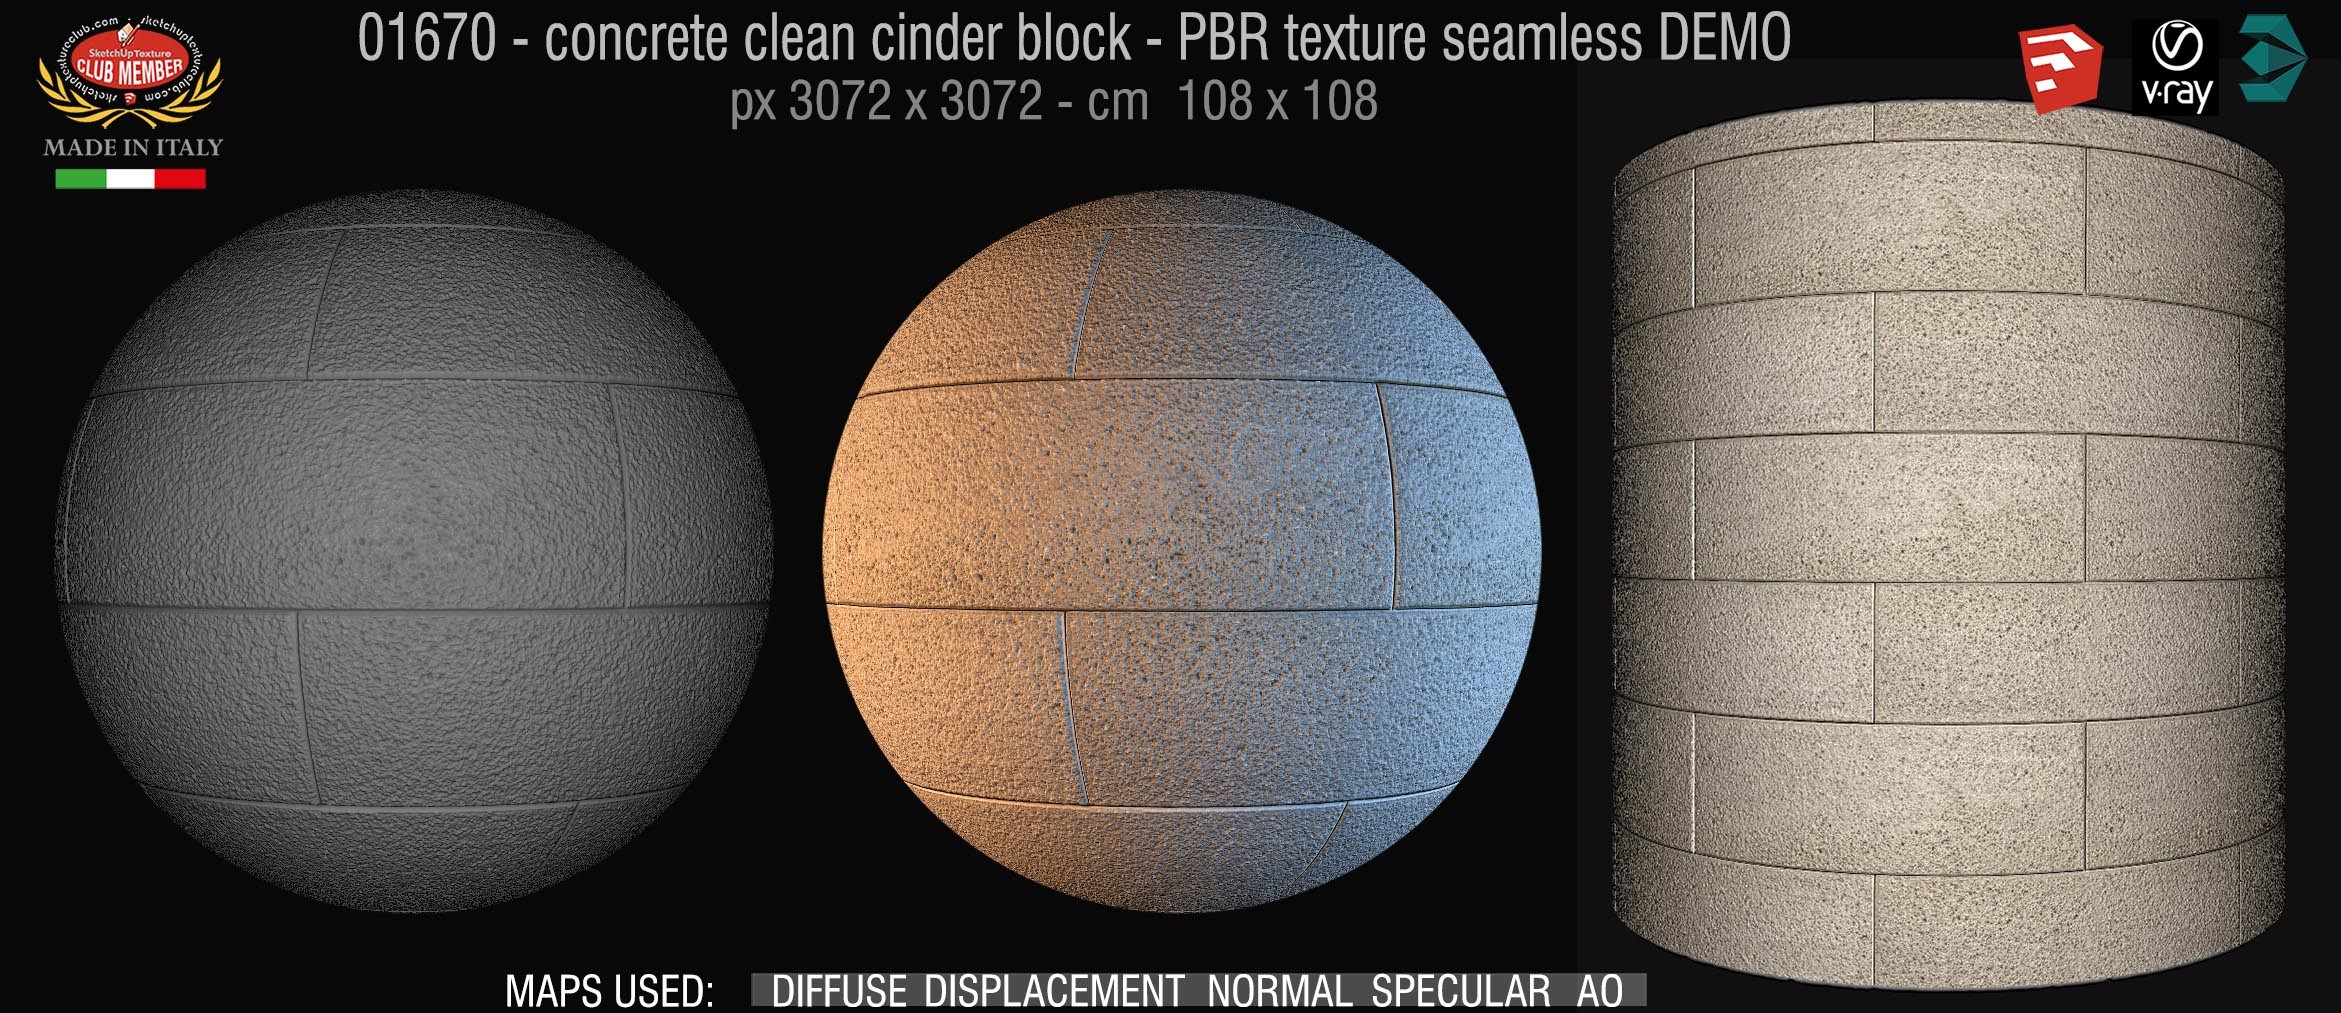 01670 concrete clean cinder block PBR texture seamless DEMO